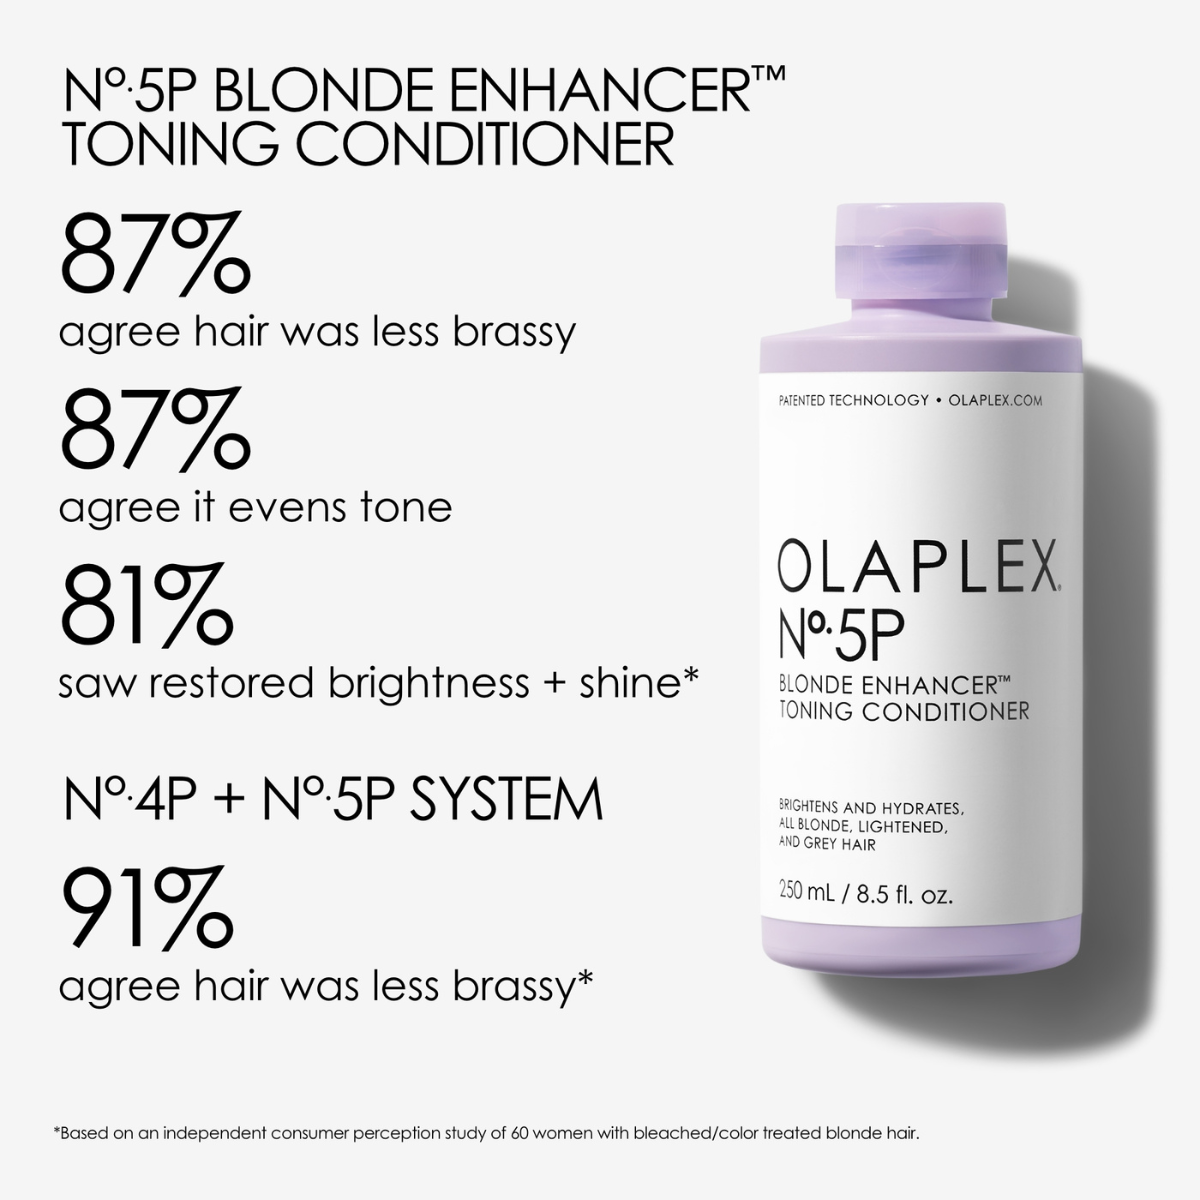 Olaplex No.5p Blonde Enhancer Toning Conditioner infographics 